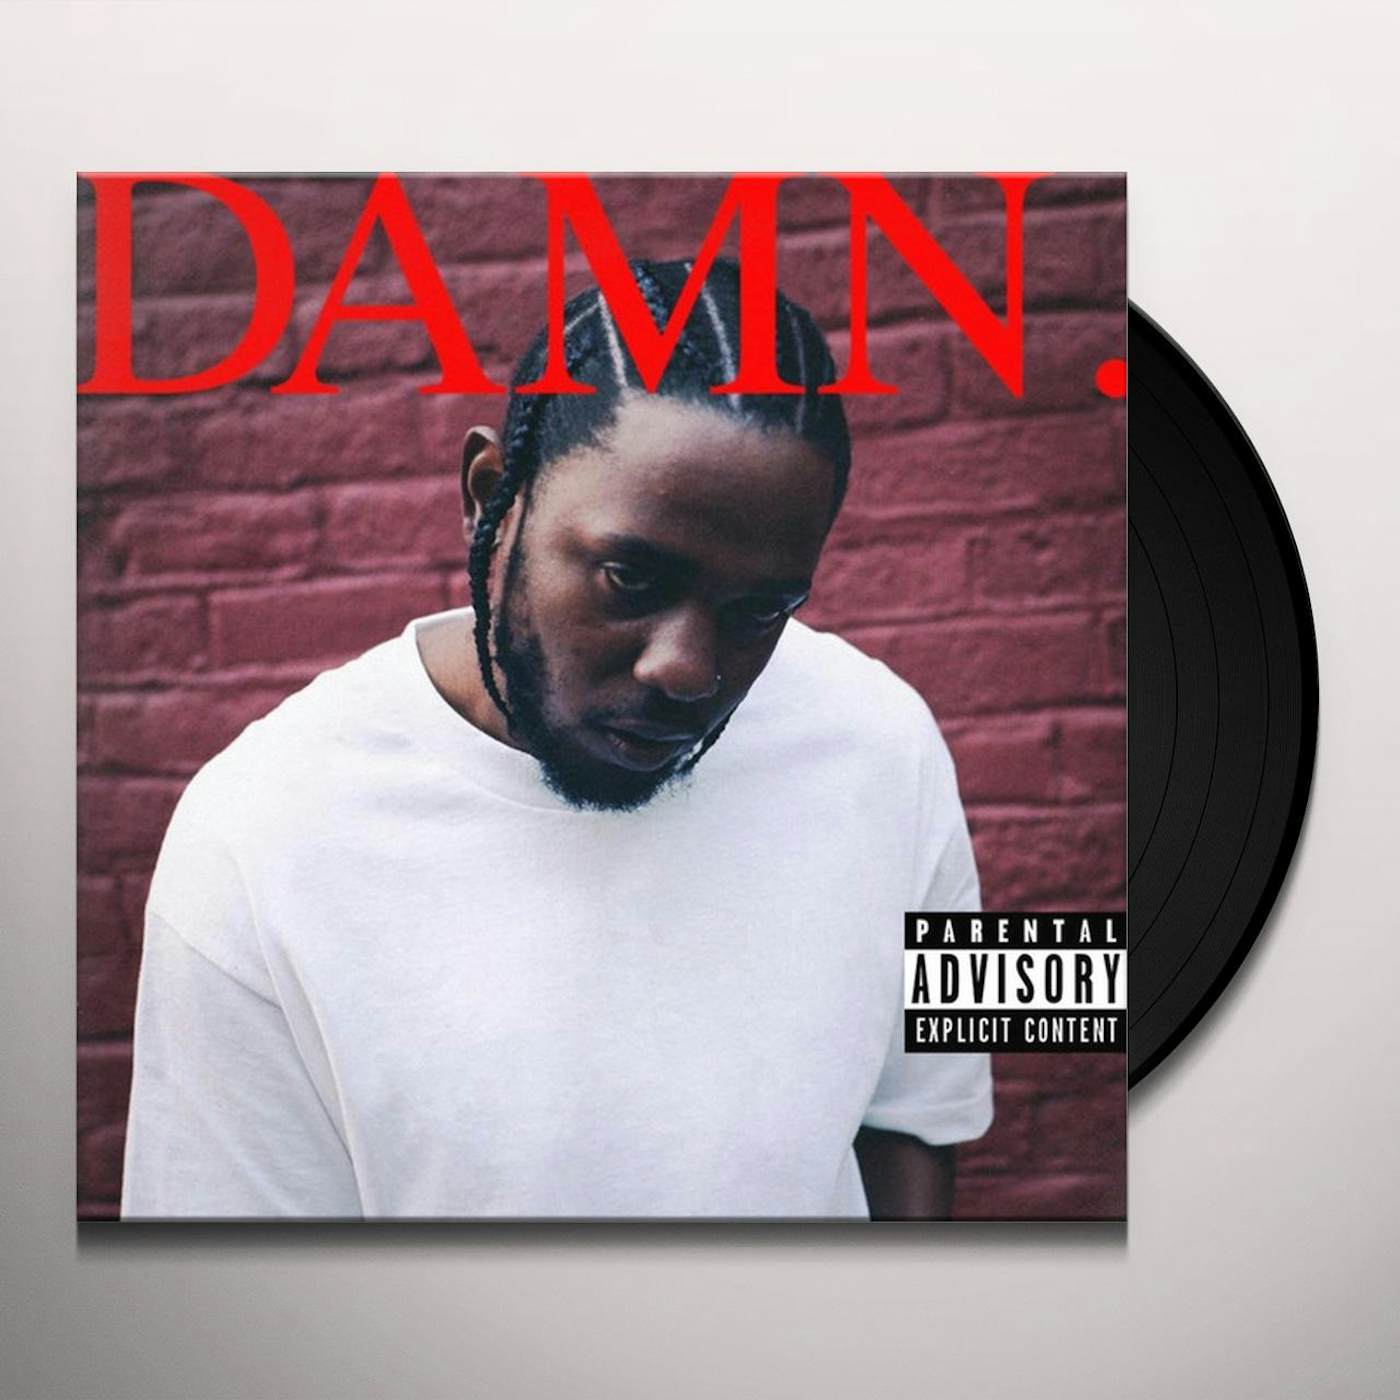 Kendrick Lamar - Black Panther vinyl album record